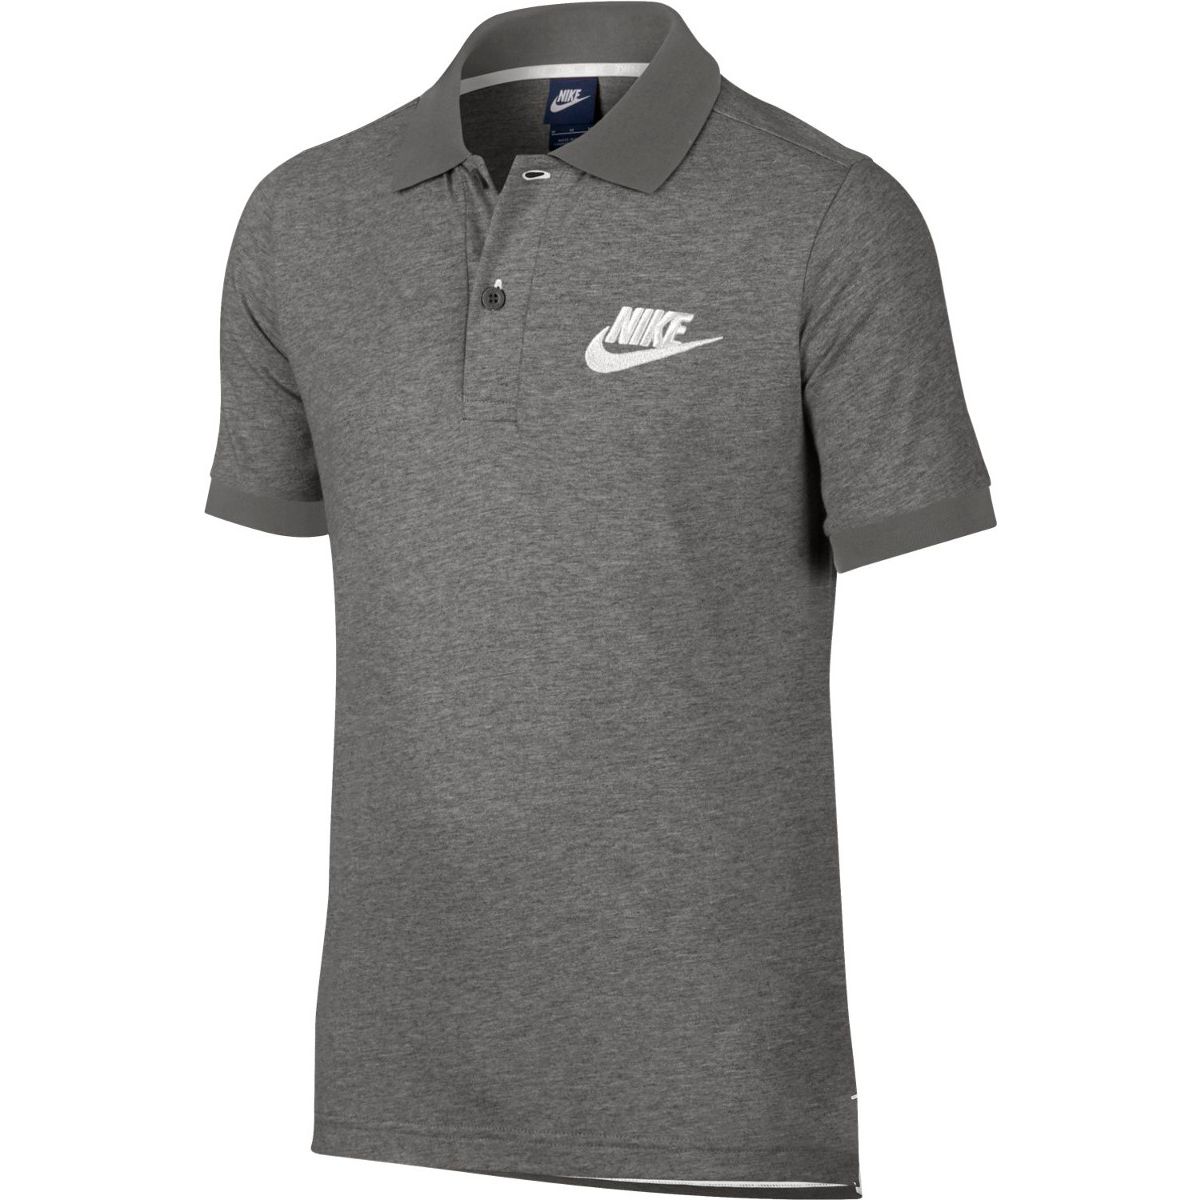 Nike Sportswear Boys' Polo 826437-064